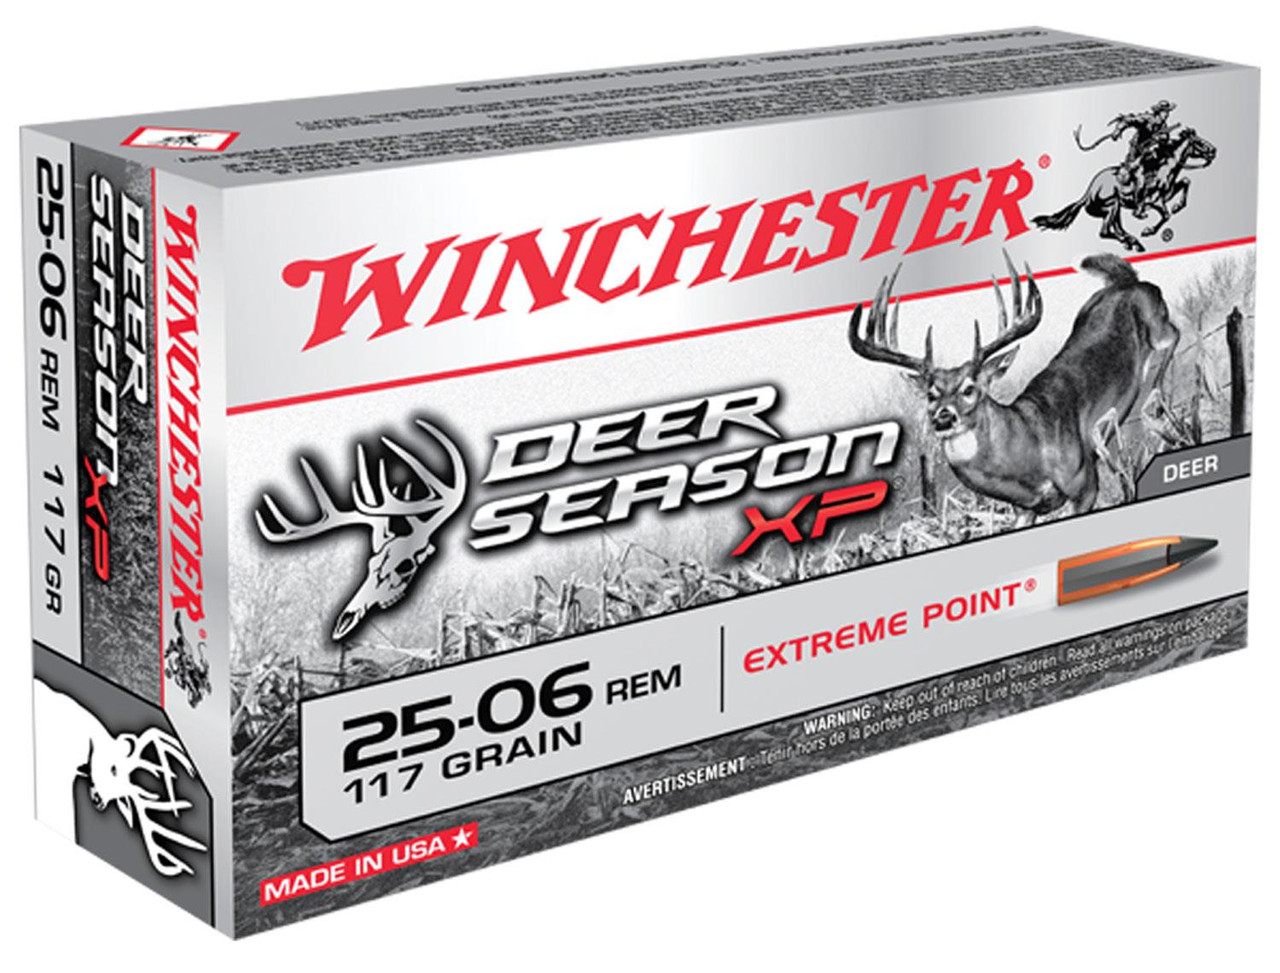 Winchester 25-06 Rem Deer Season XP 117 Grain